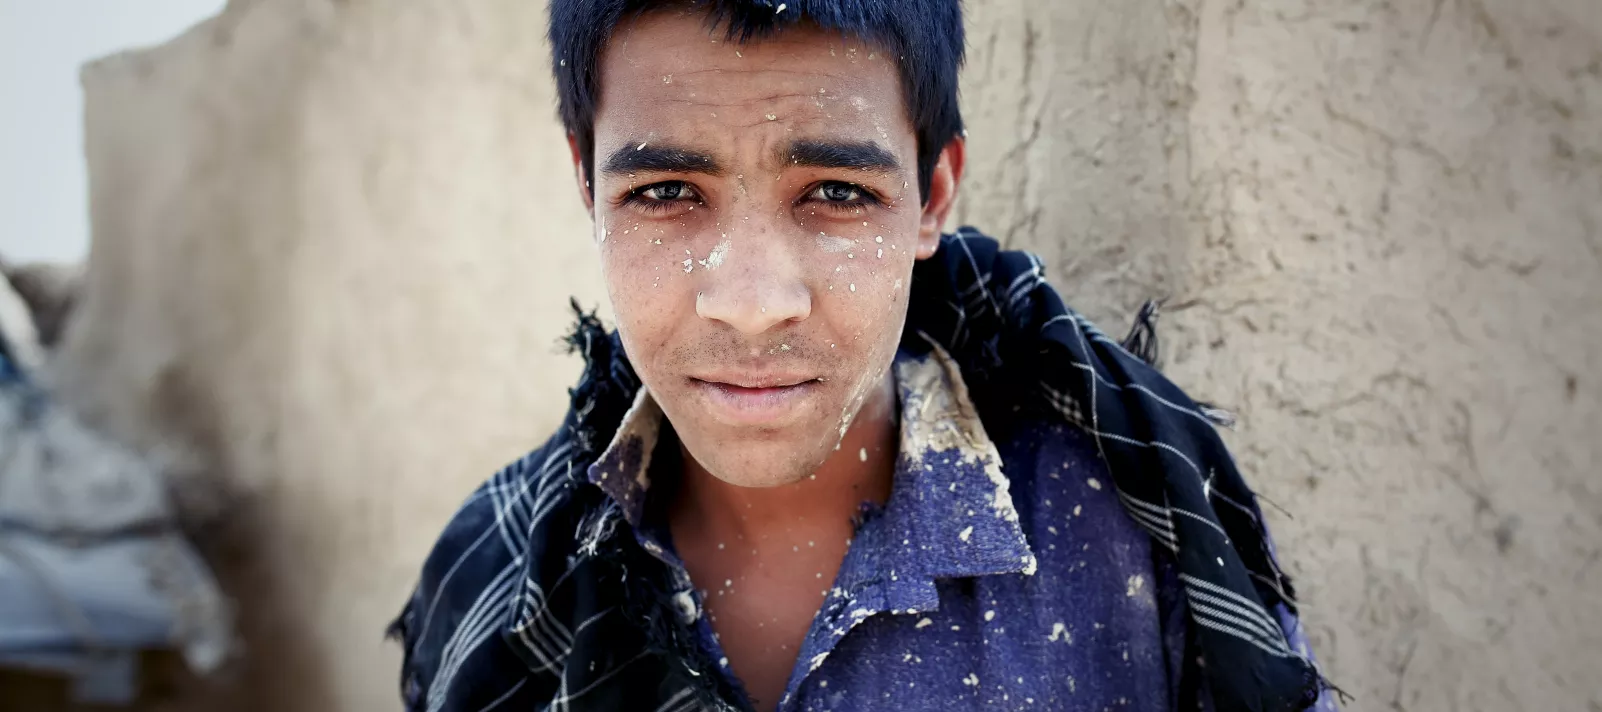 A boy in Afghanistan 